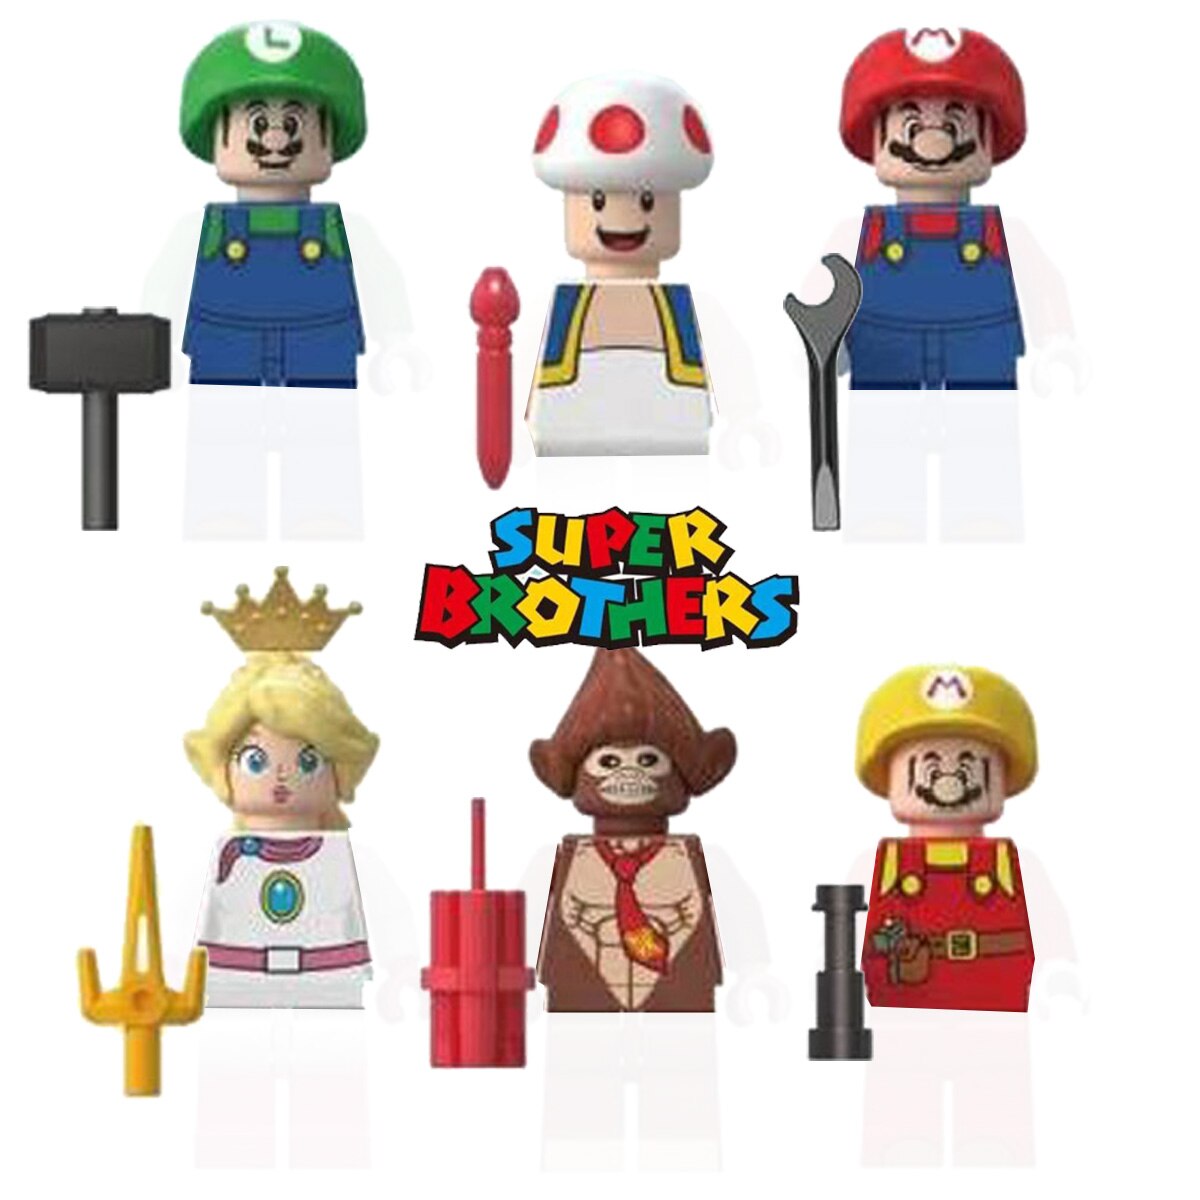 Super-Bros-Mario-Building-Blocks-Luigi-mini-Action-toy-Figures-Building-Blocks-Toys-Bricks-Ass...jpg